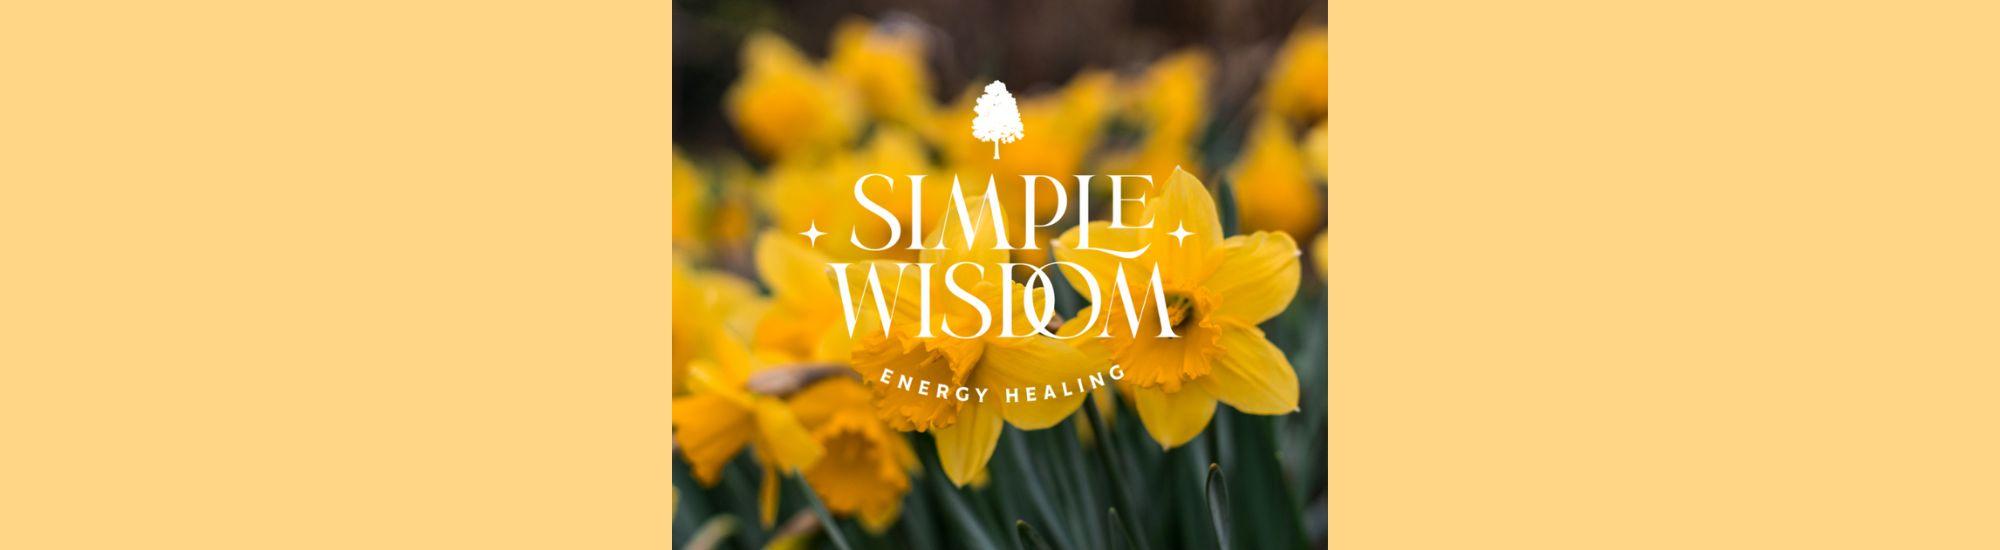 simple wisdom energy healing